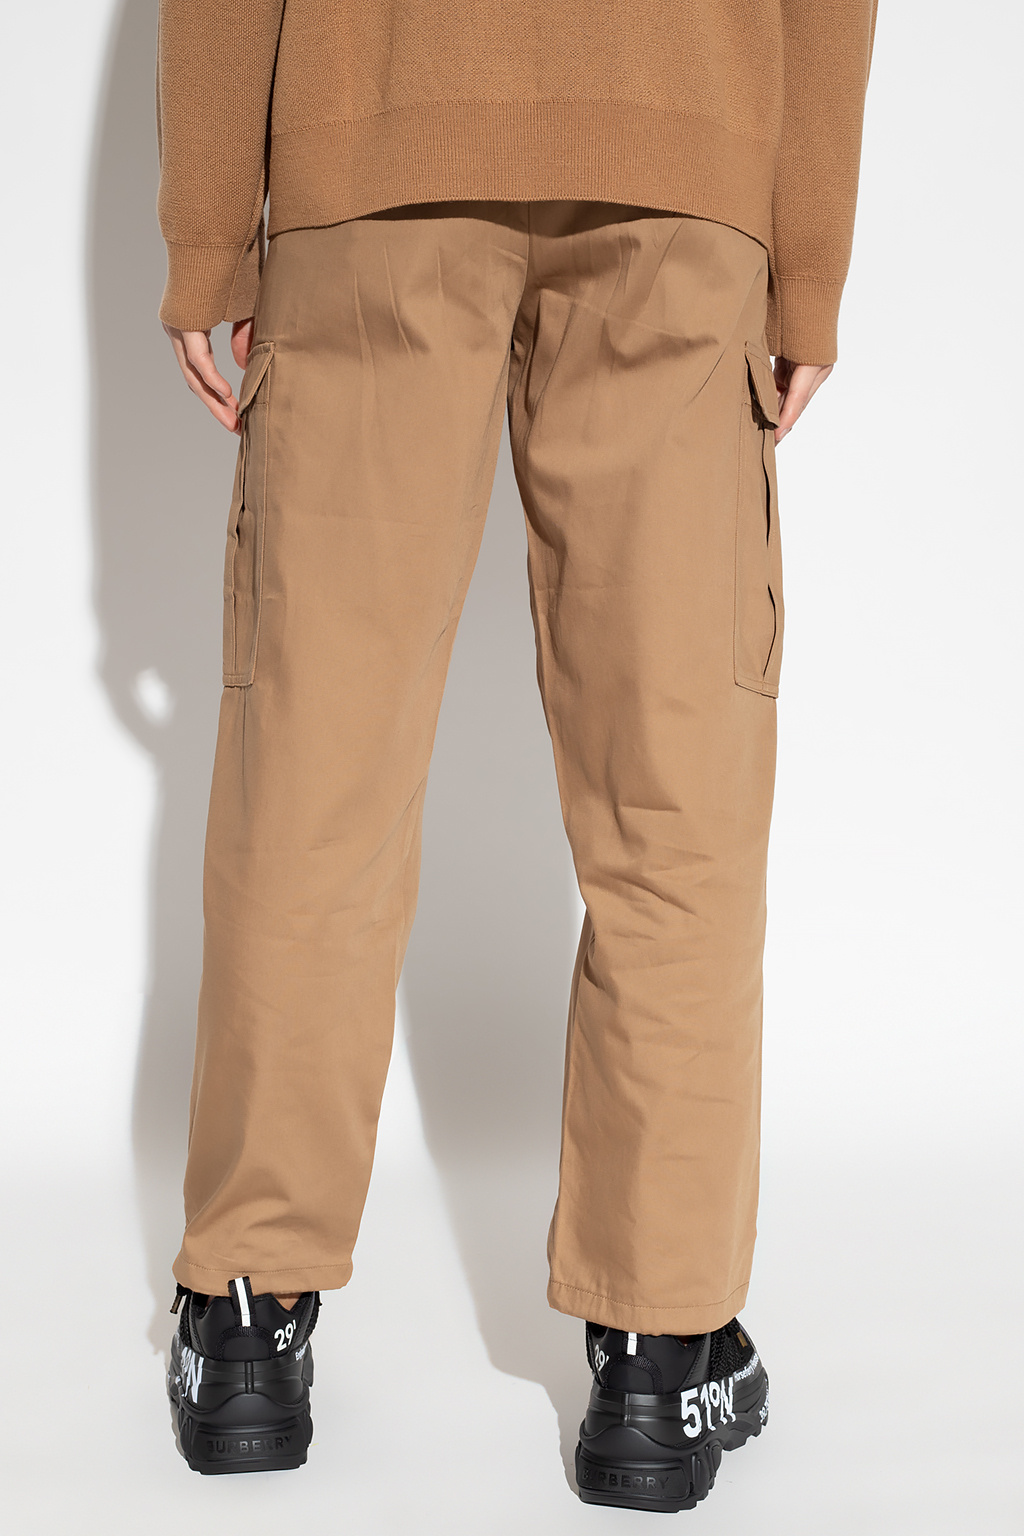 Burberry ‘Capleton’ check-print trousers